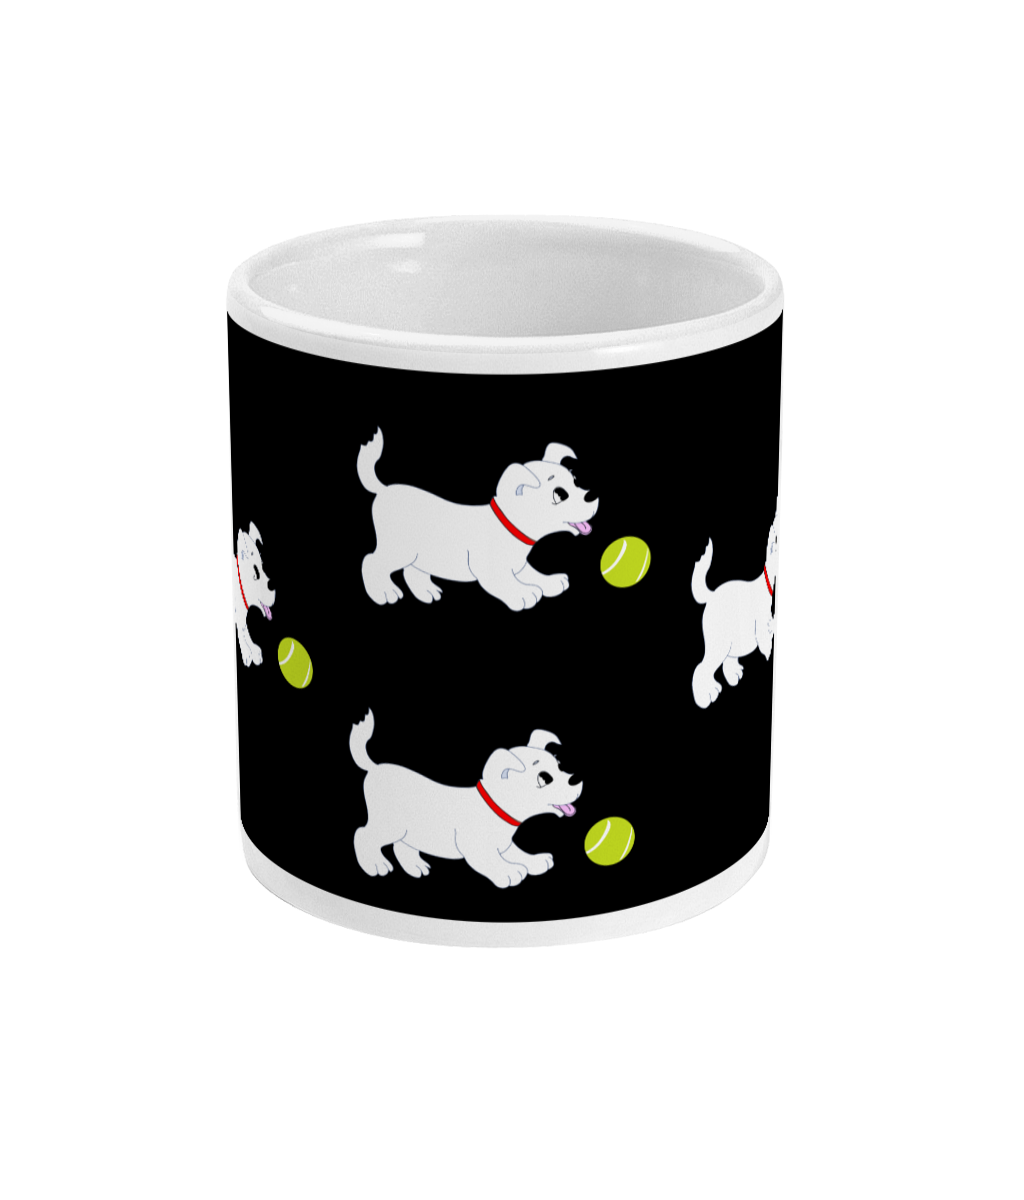 Dog Chasing Tennis Ball Mug